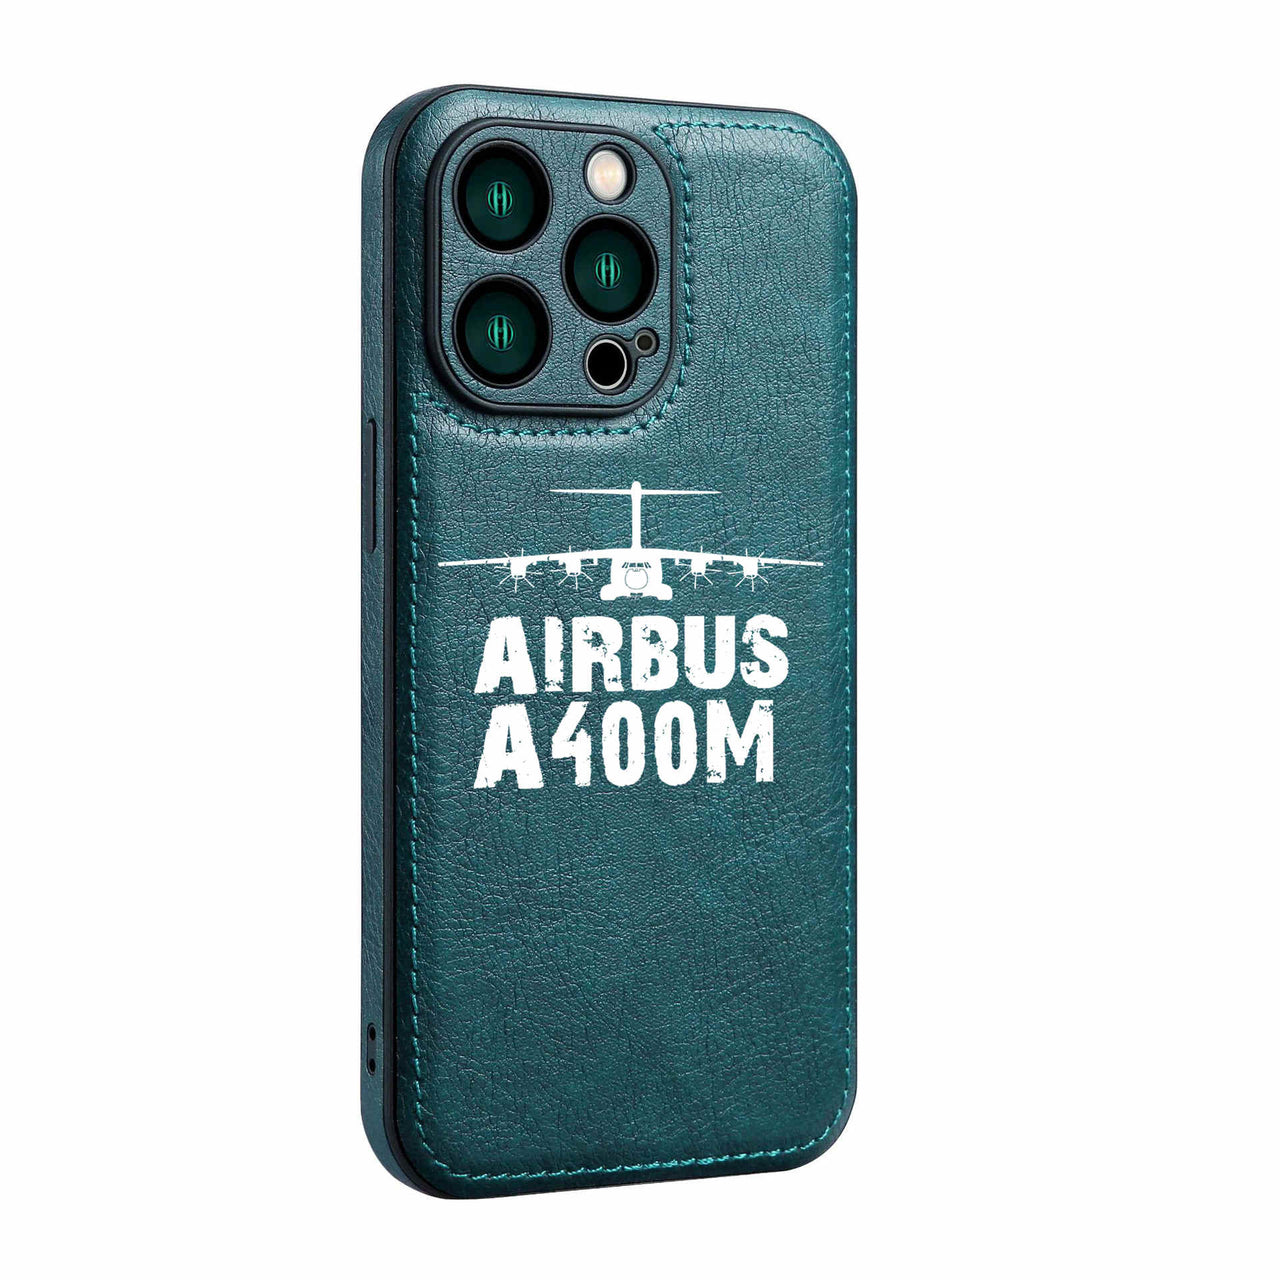 Airbus A400M & Plane Designed Leather iPhone Cases